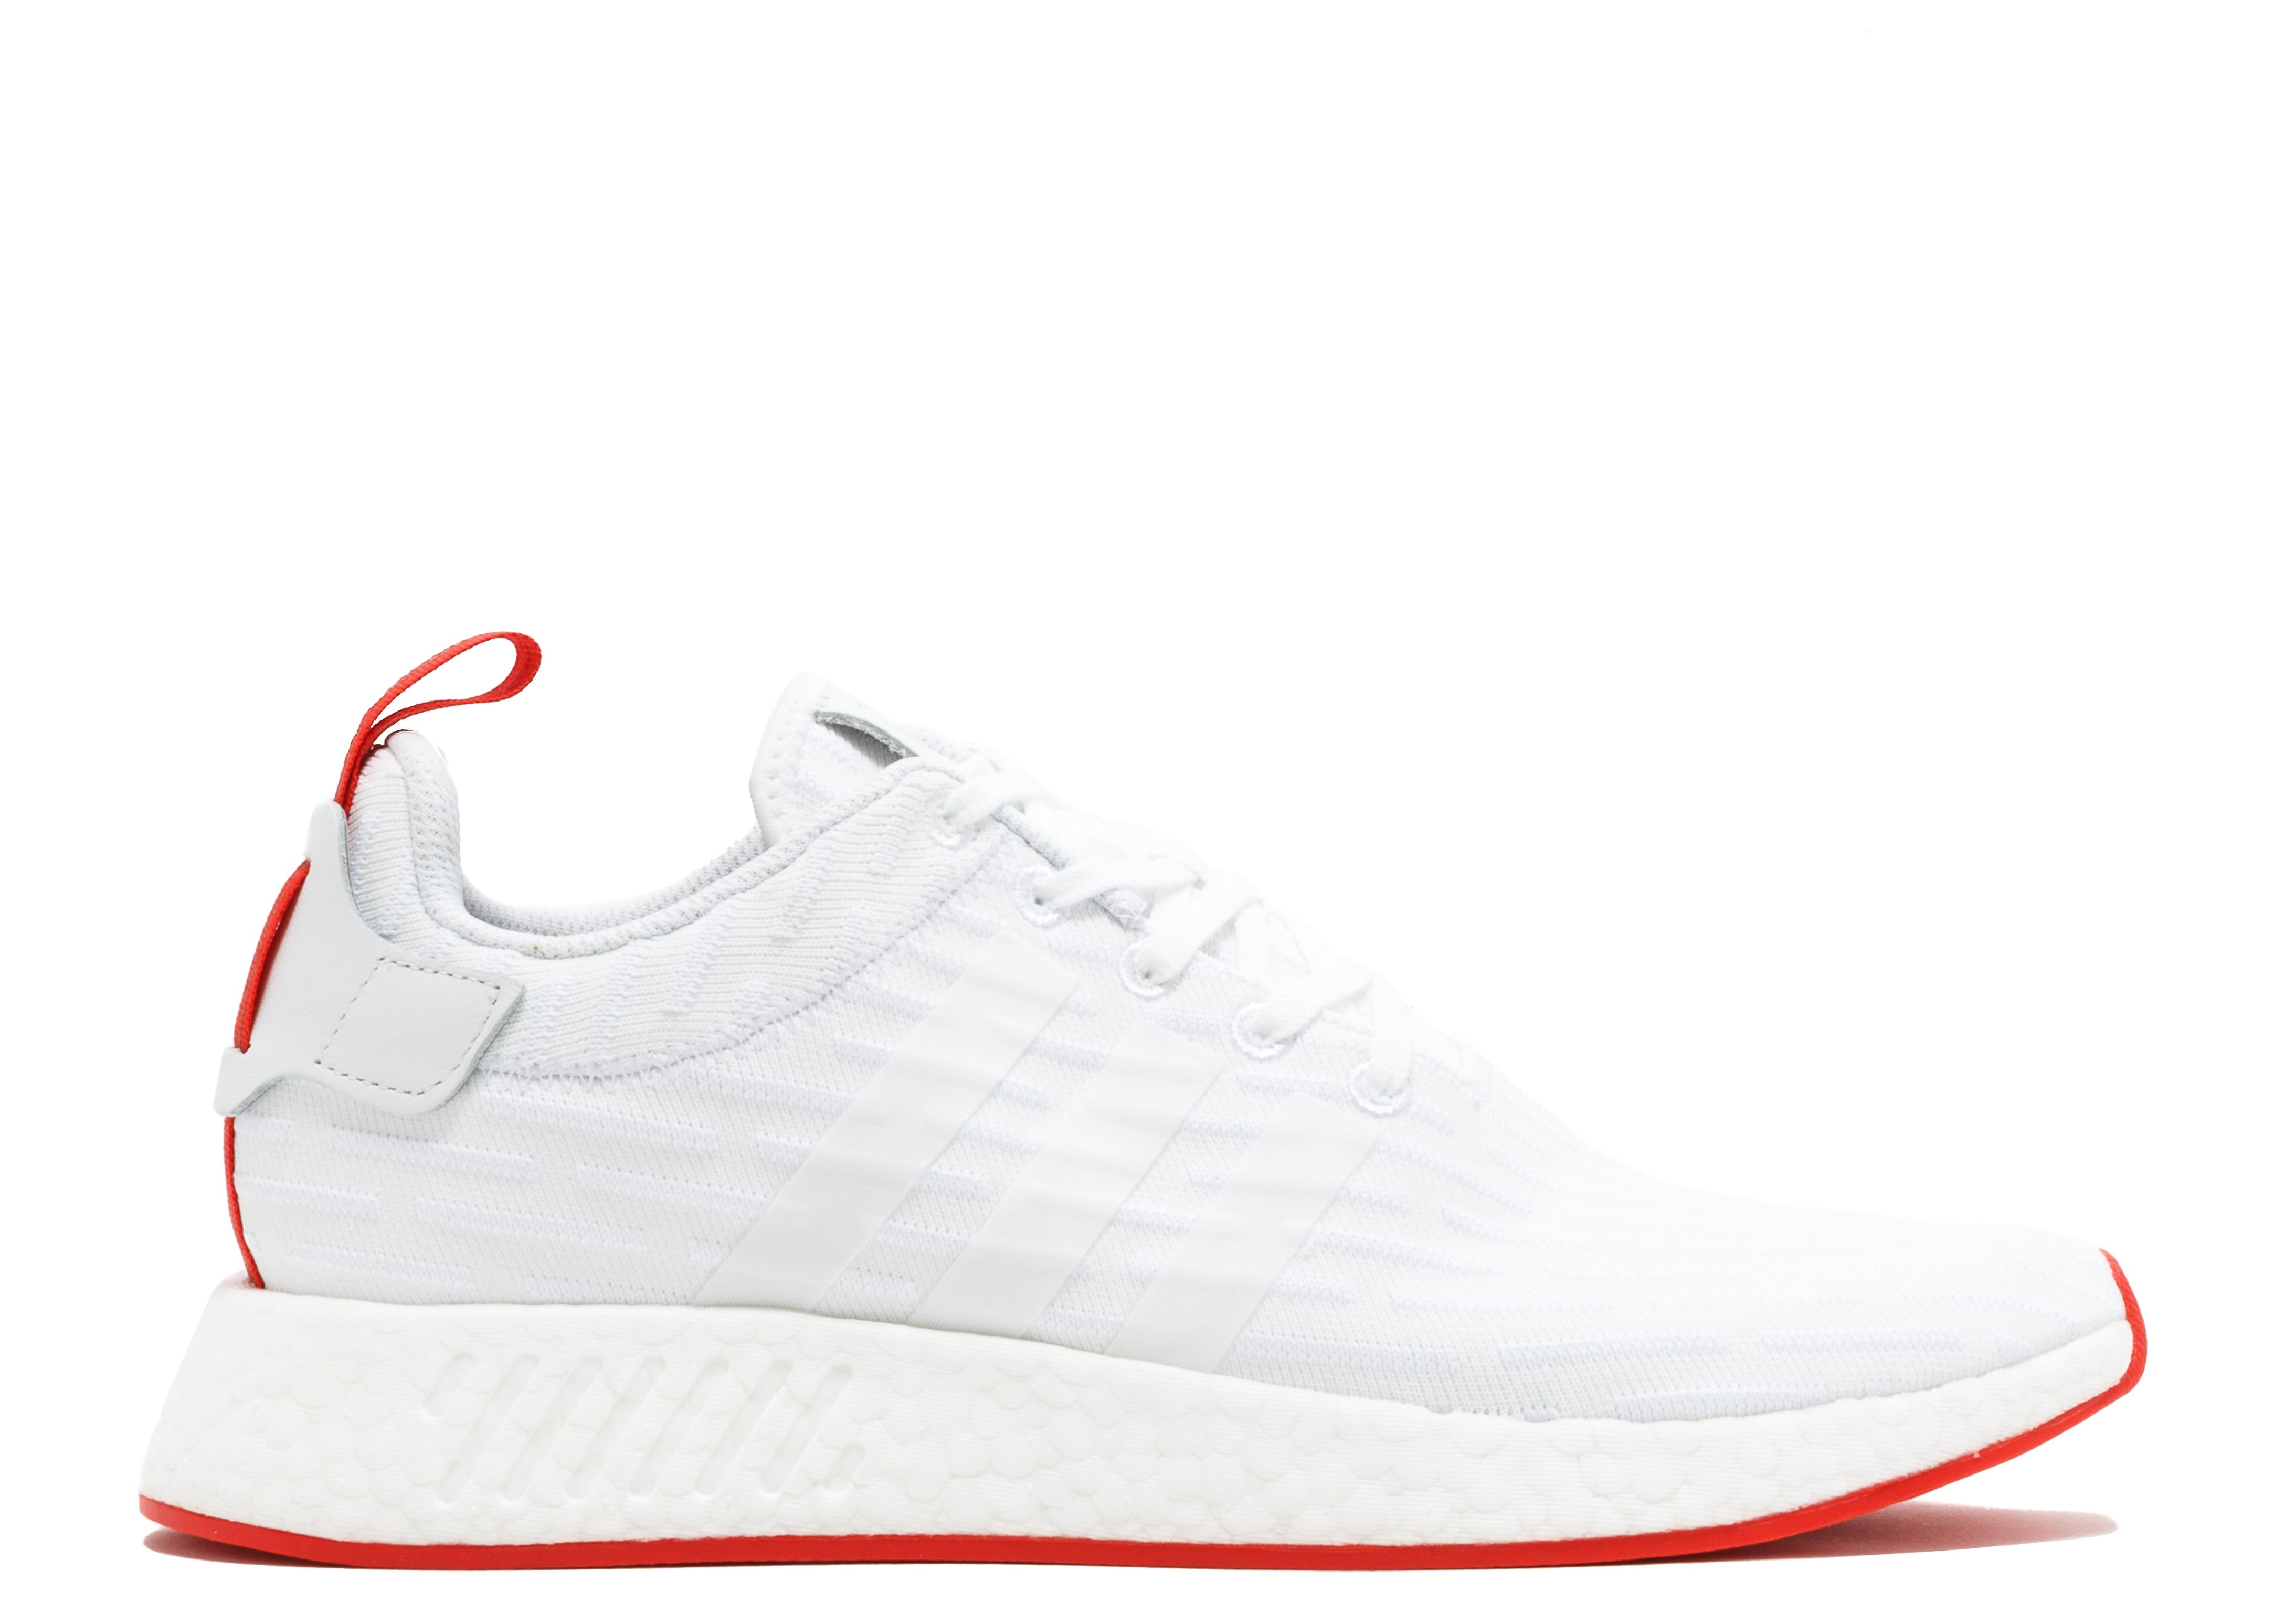 NMD_R2 Primeknit 'Running White' - Adidas - - white/red | Flight